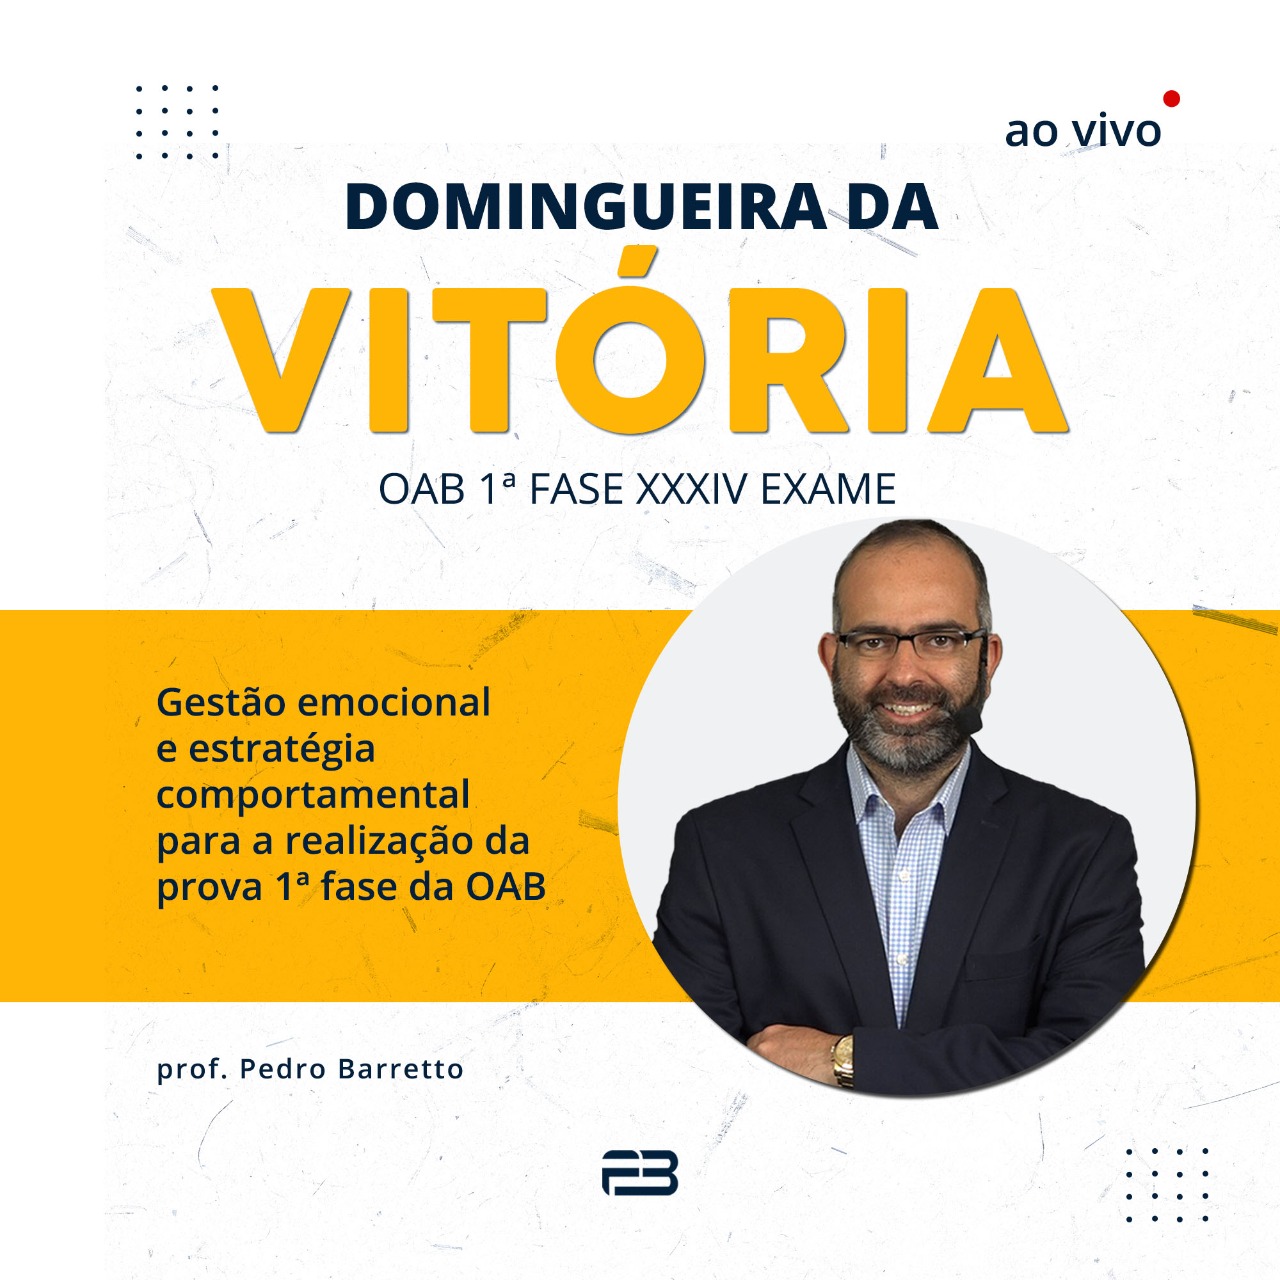 DOMINGUEIRA DA VITÓRIA - OAB 1º FASE XXXIV